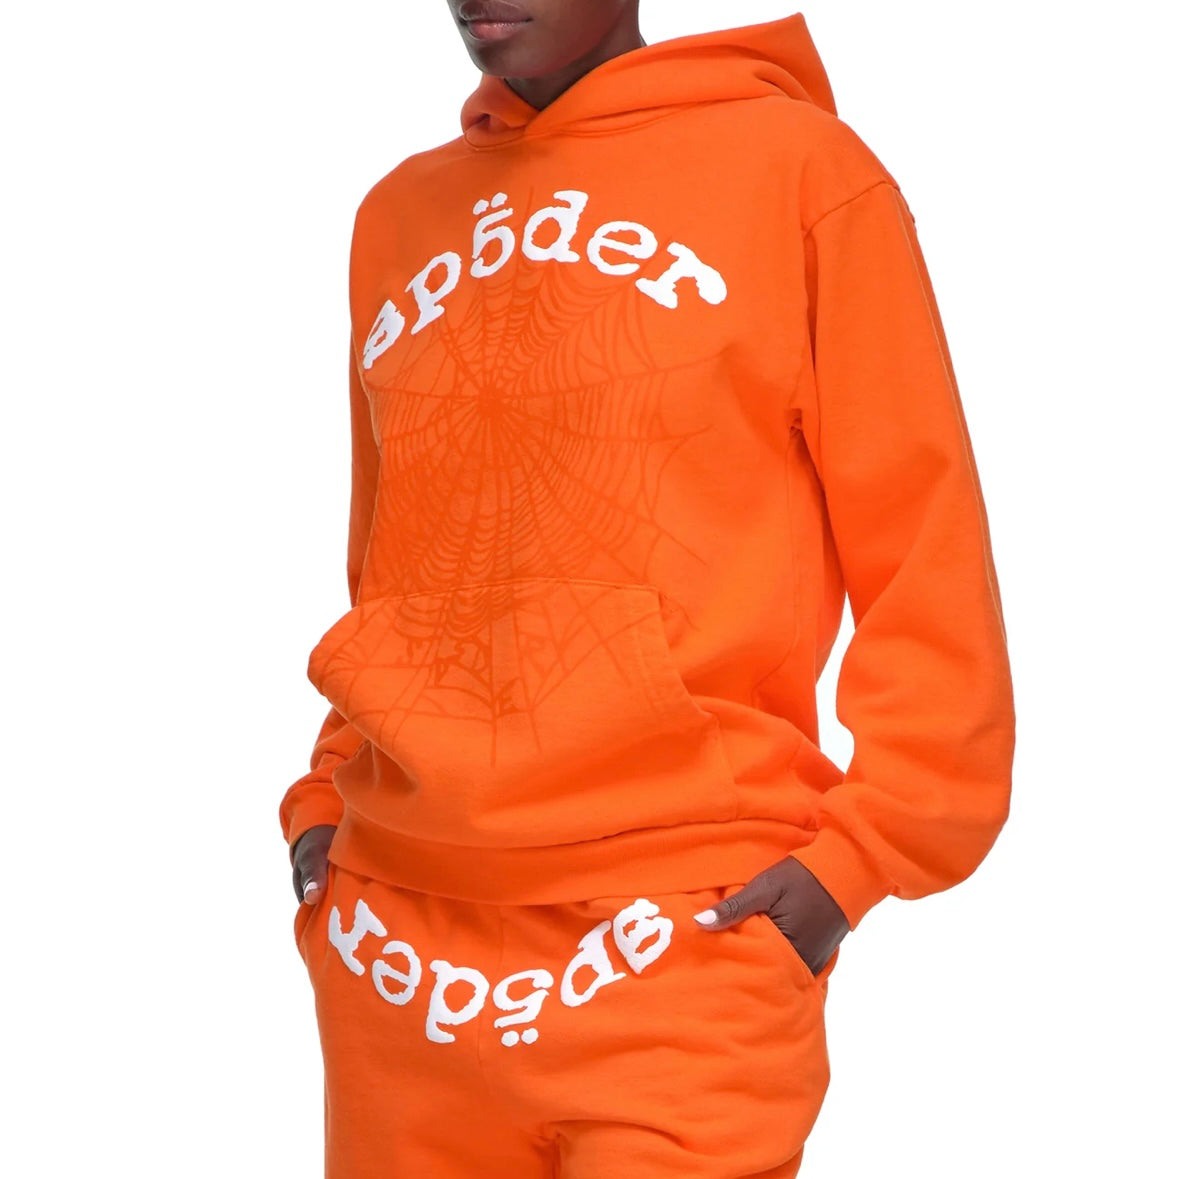 Sp5der Orange White Legacy Hoodie On Body Front Left